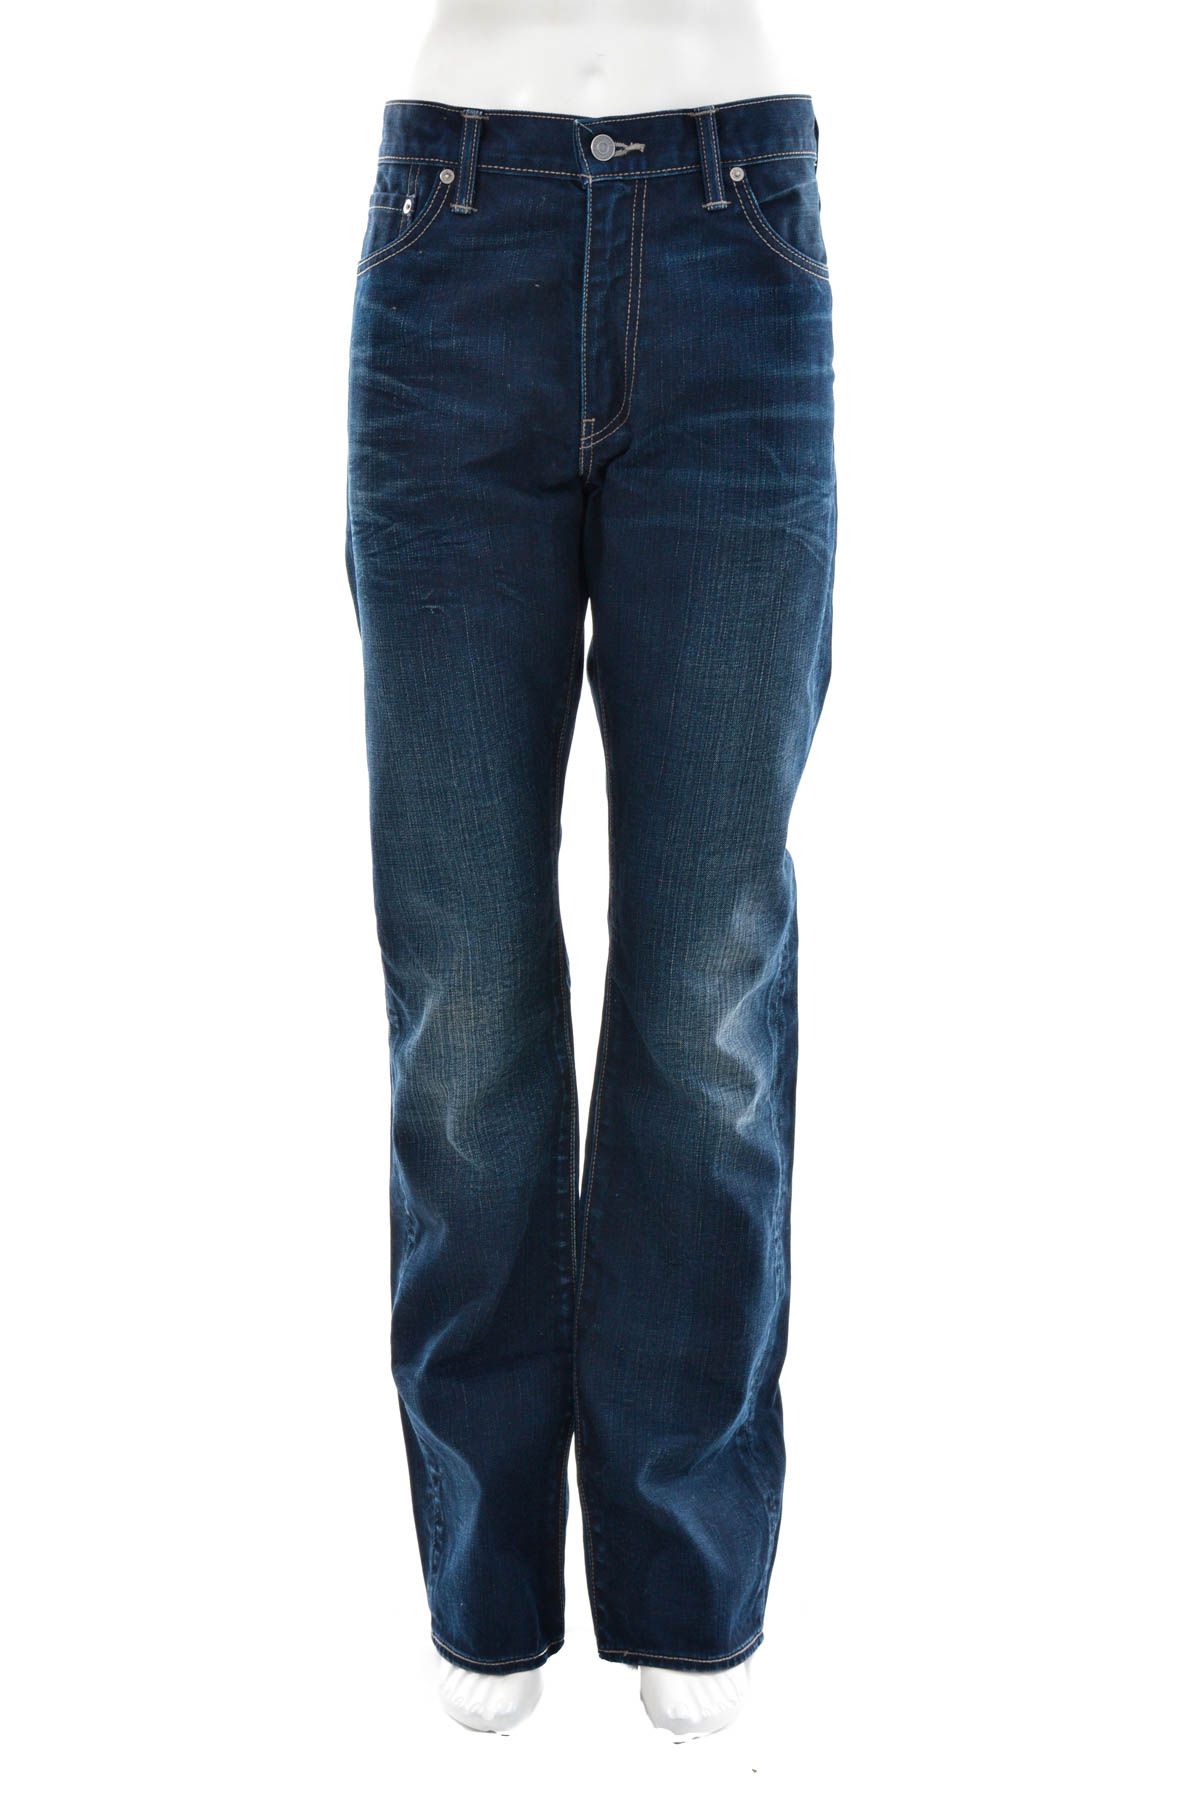 Men's jeans - Levi Strauss & Co - 0